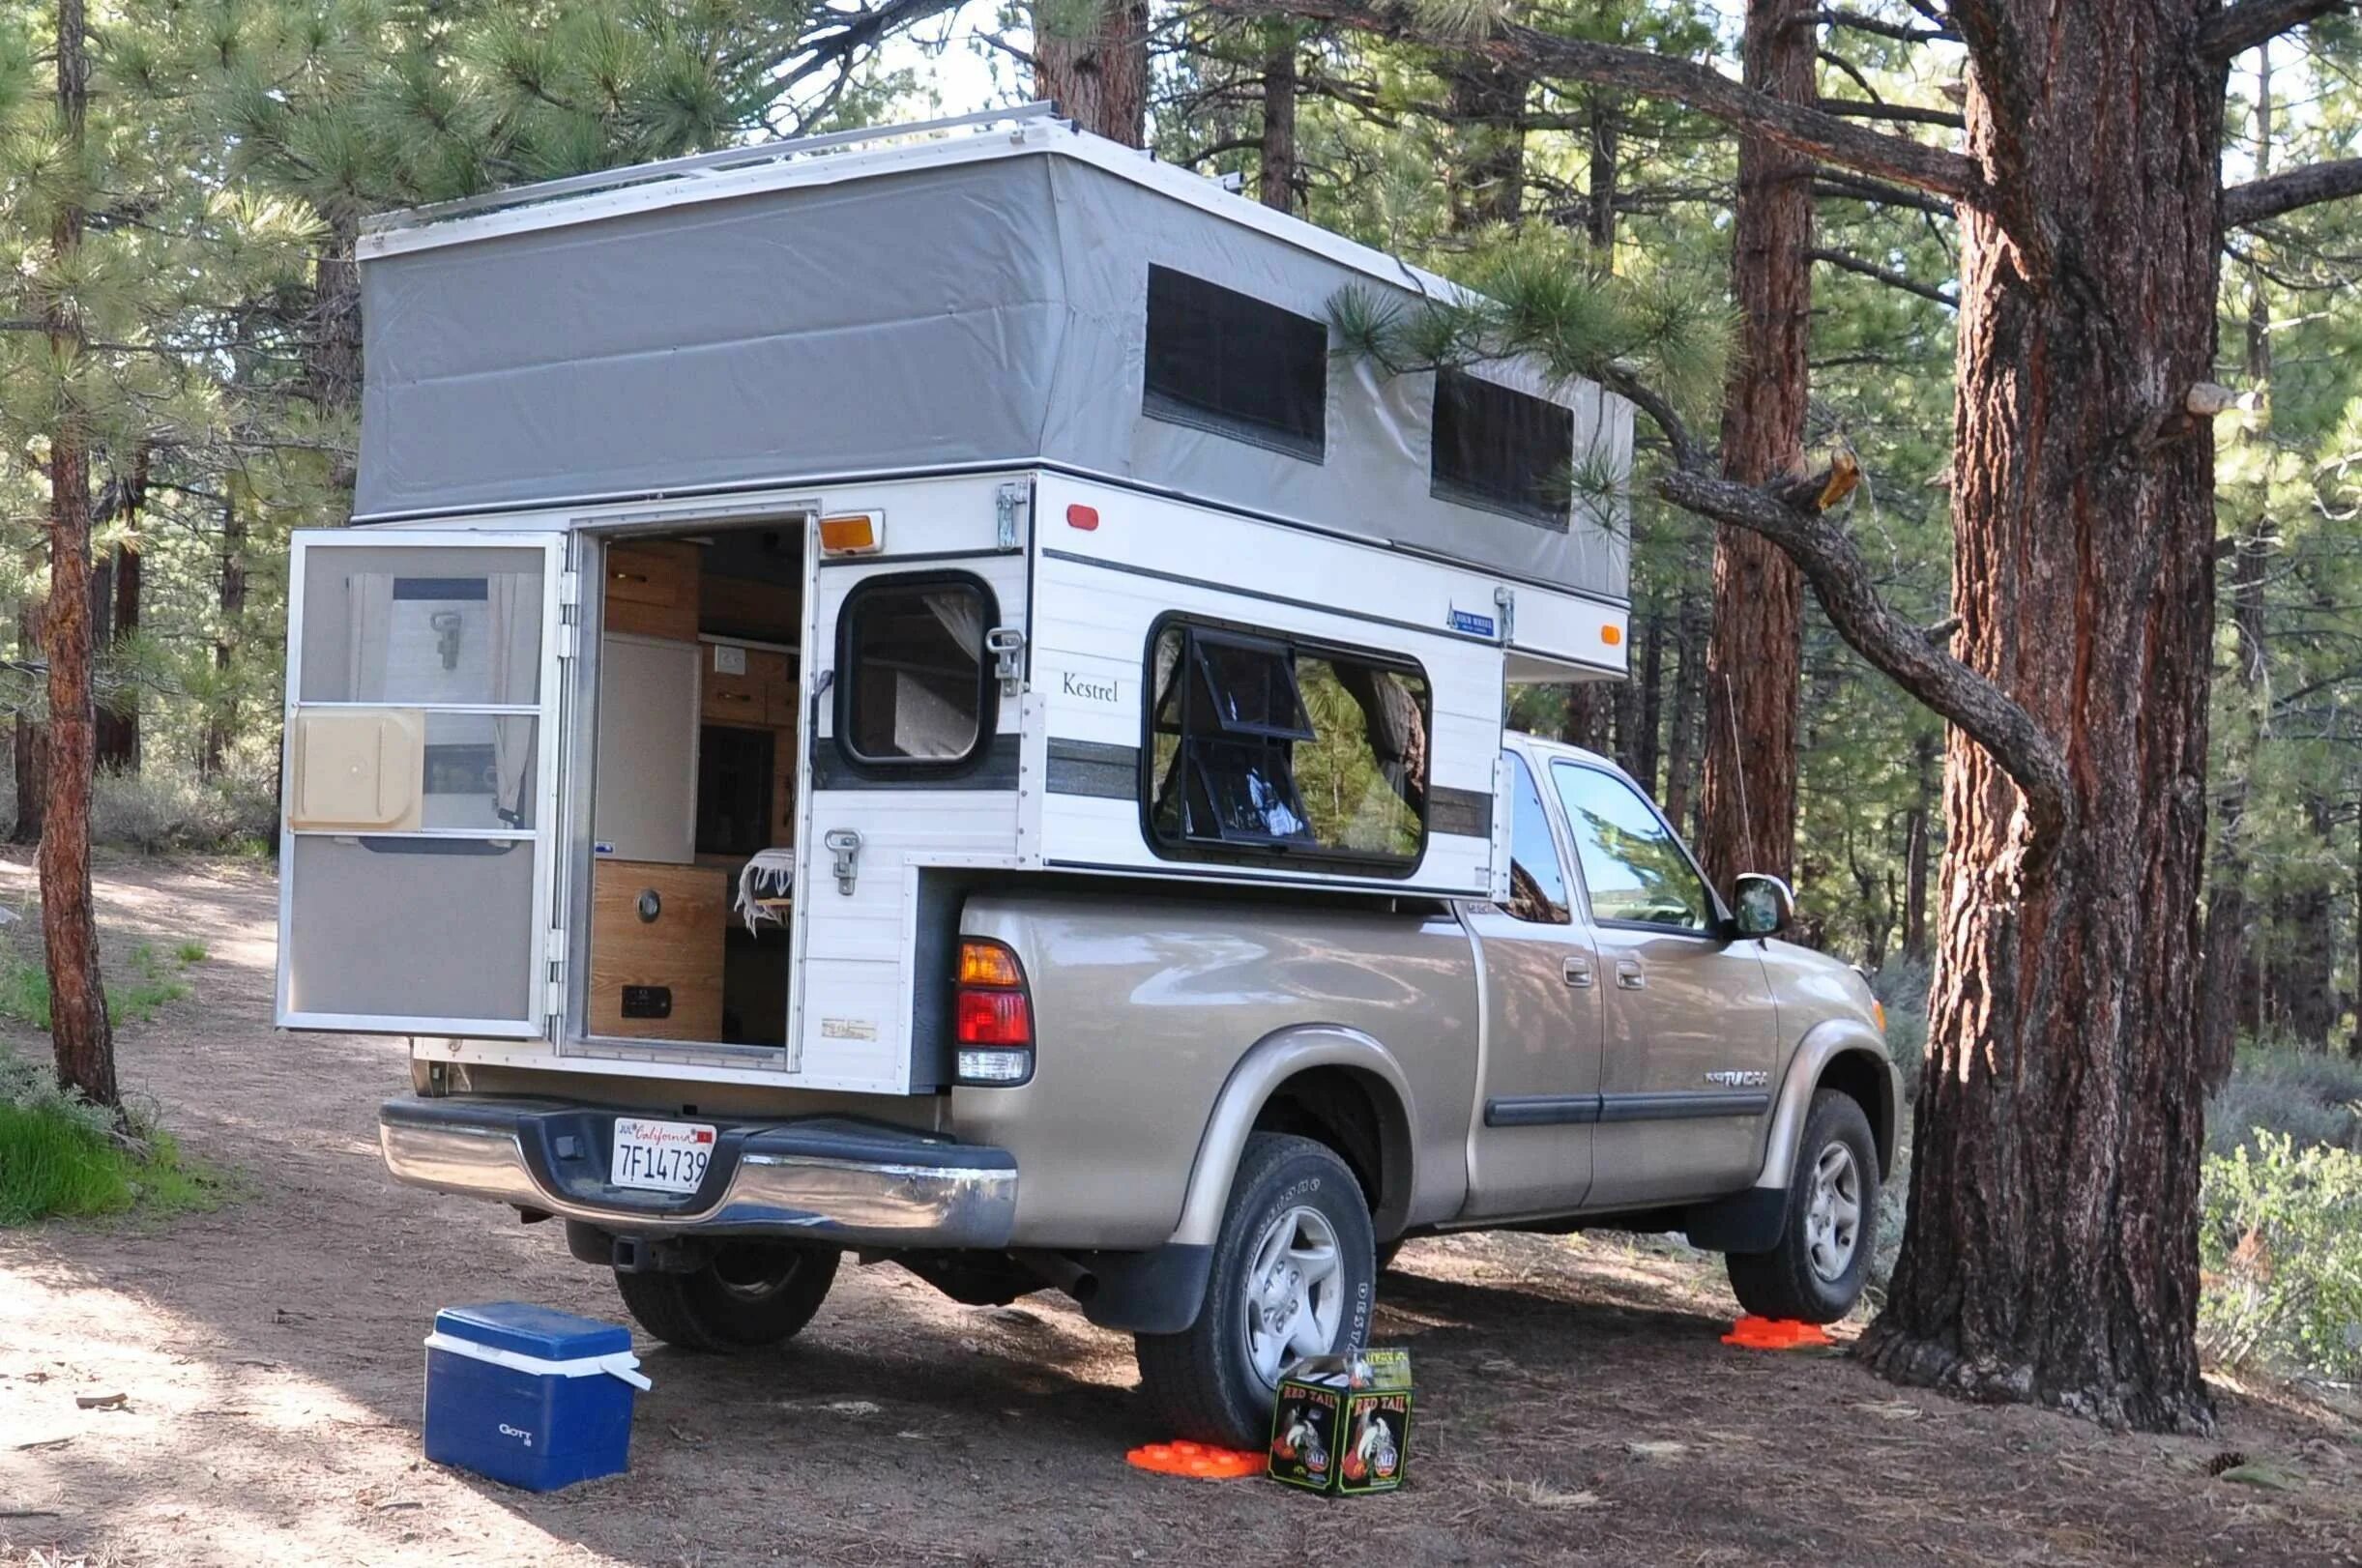 Дом на пикап. Автодом Pickup Camper. Toyota Dyna Campers кемпинг автодом. Camper Pop-up Camper. Pickup Truck Camper.